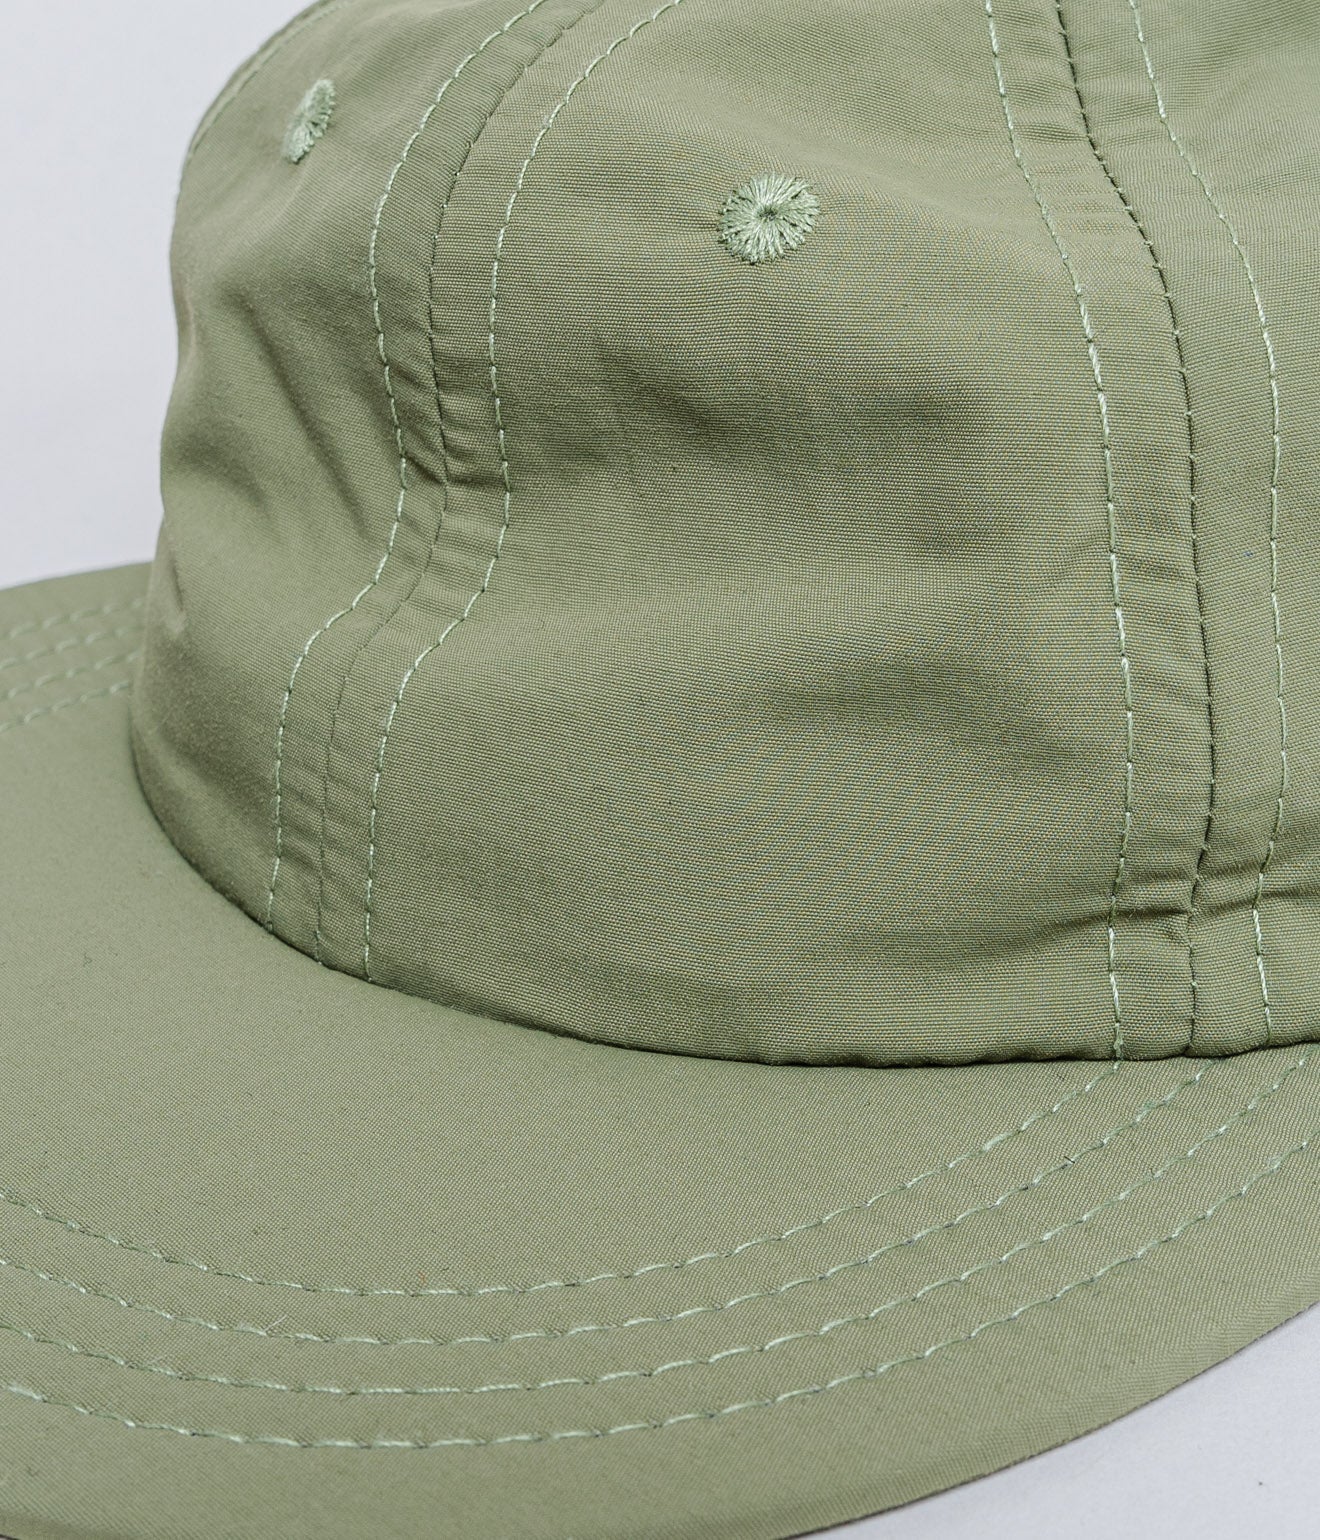 LITE YEAR "Nylon Twill Weather Cloth 6 panel cap" Army Green - WEAREALLANIMALS